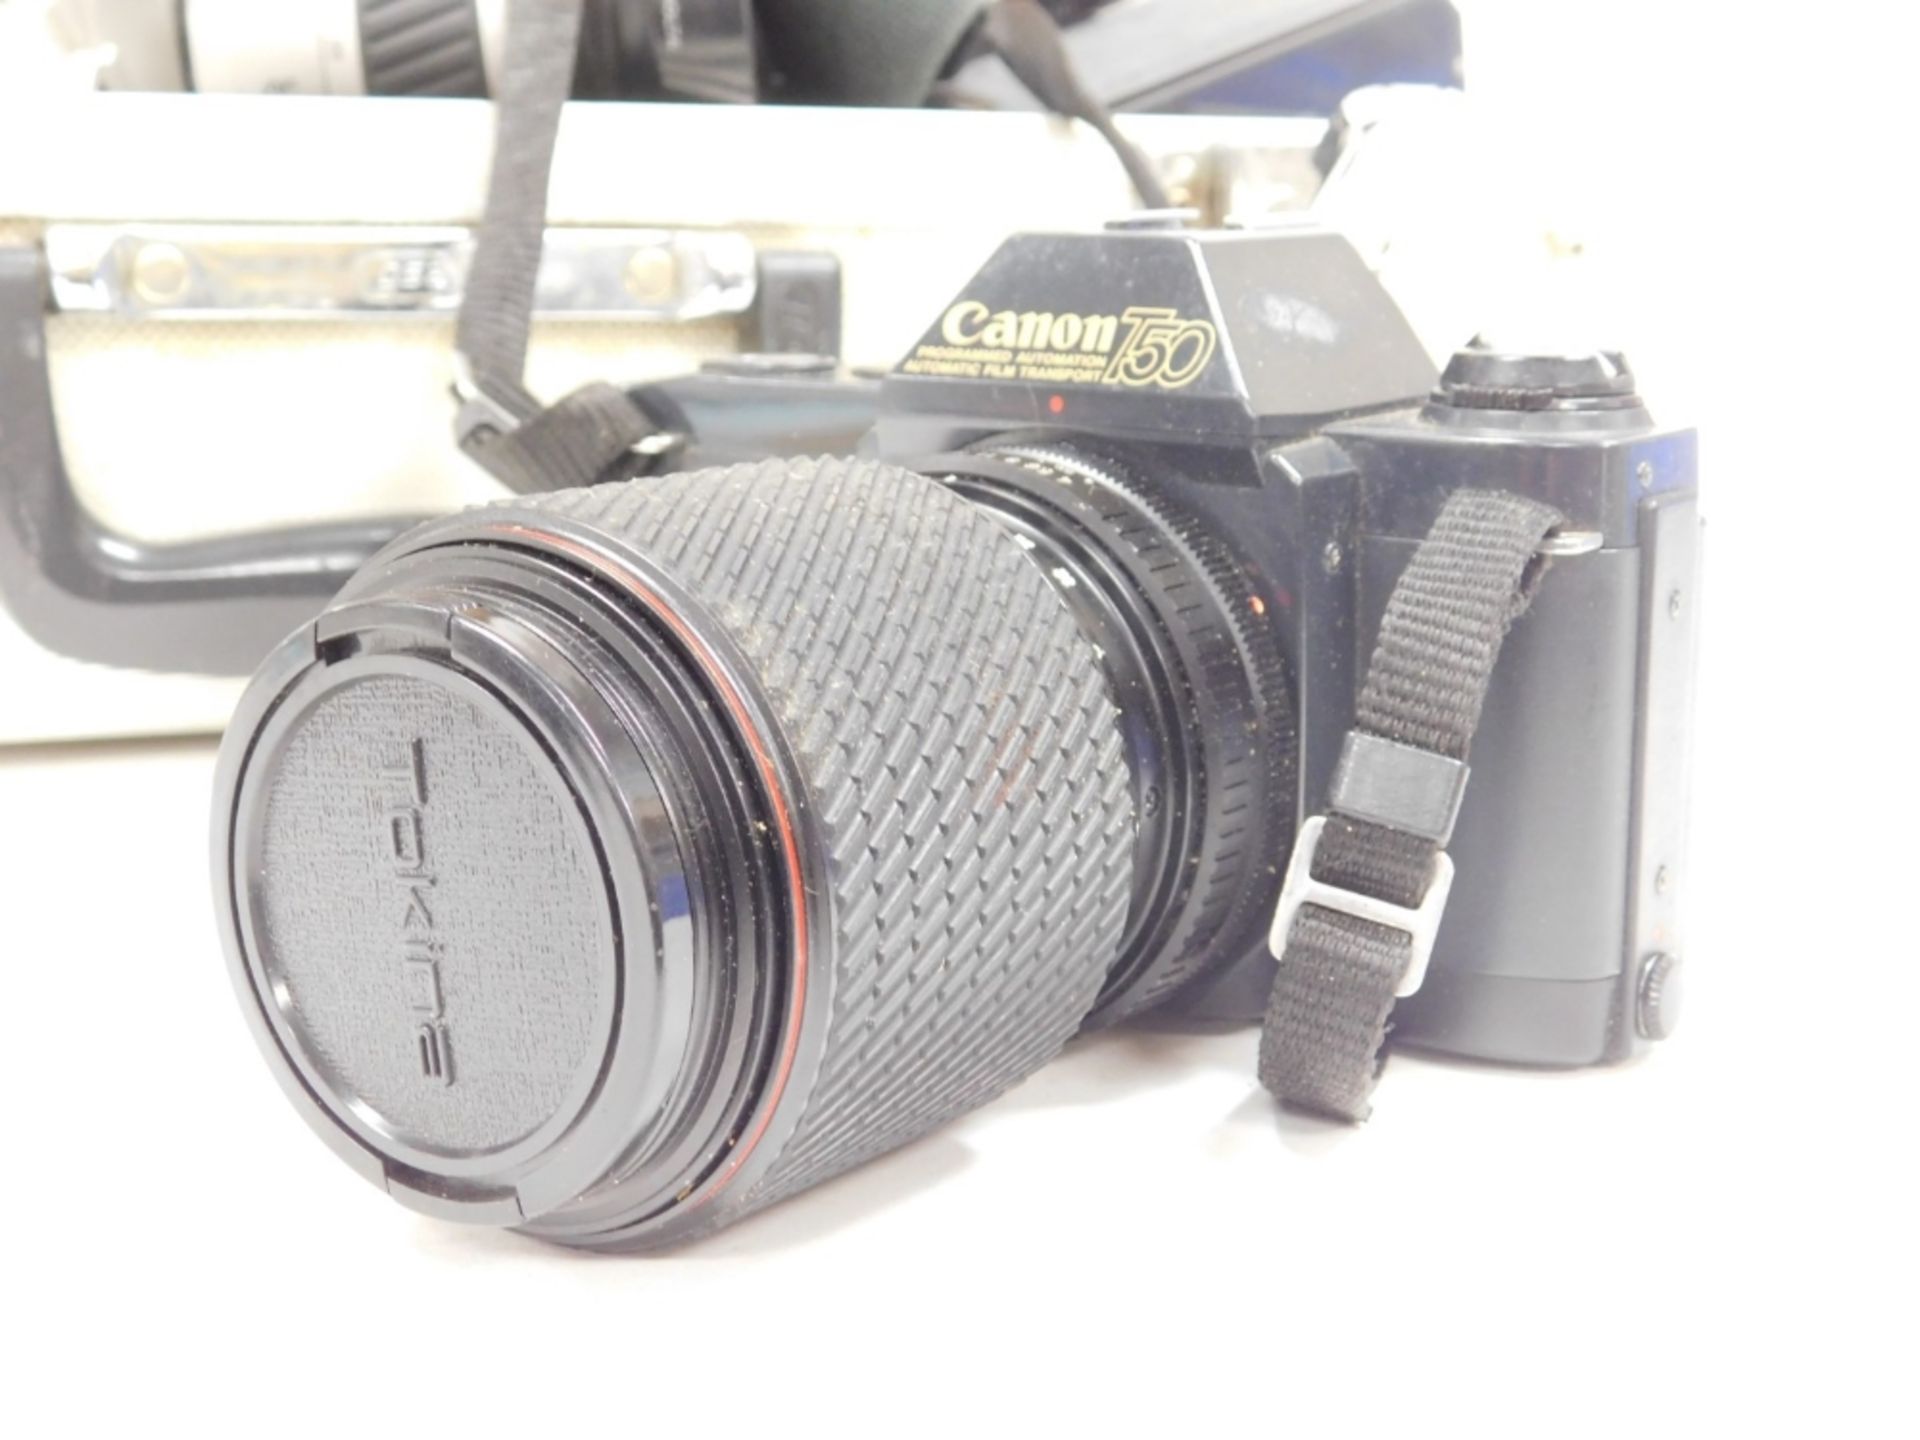 A Pentax P30 camera, Canon AE-1 camera, Canon T50 camera, Minolta 404SI Dynax digital camera, and fu - Image 4 of 6